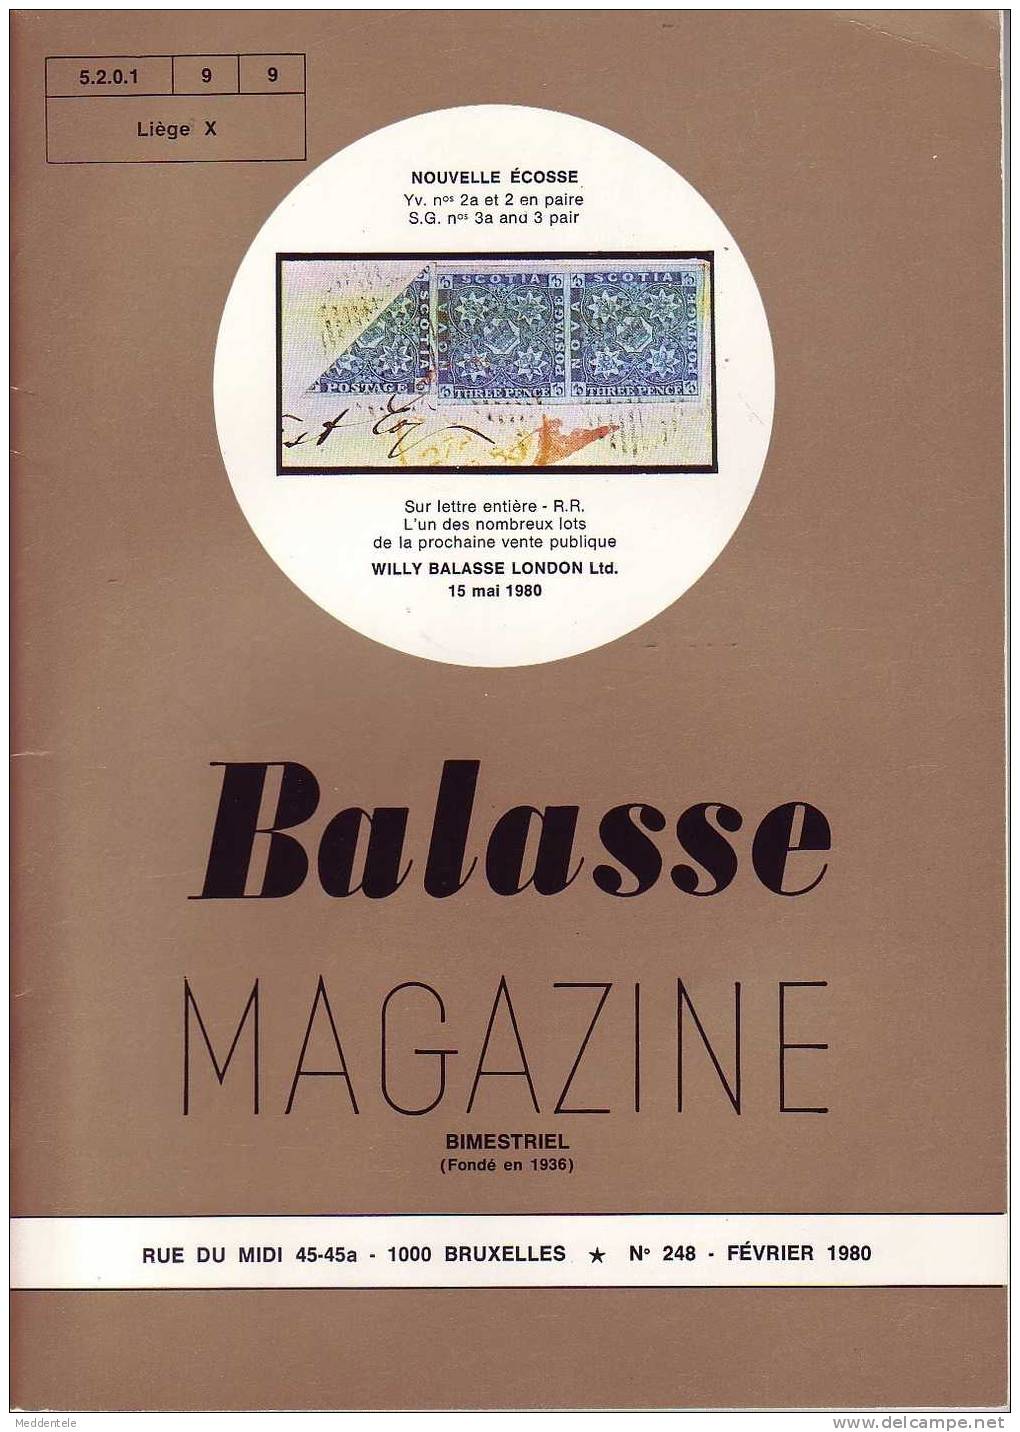 BALASSE MAGAZINE N° 248 - French (from 1941)